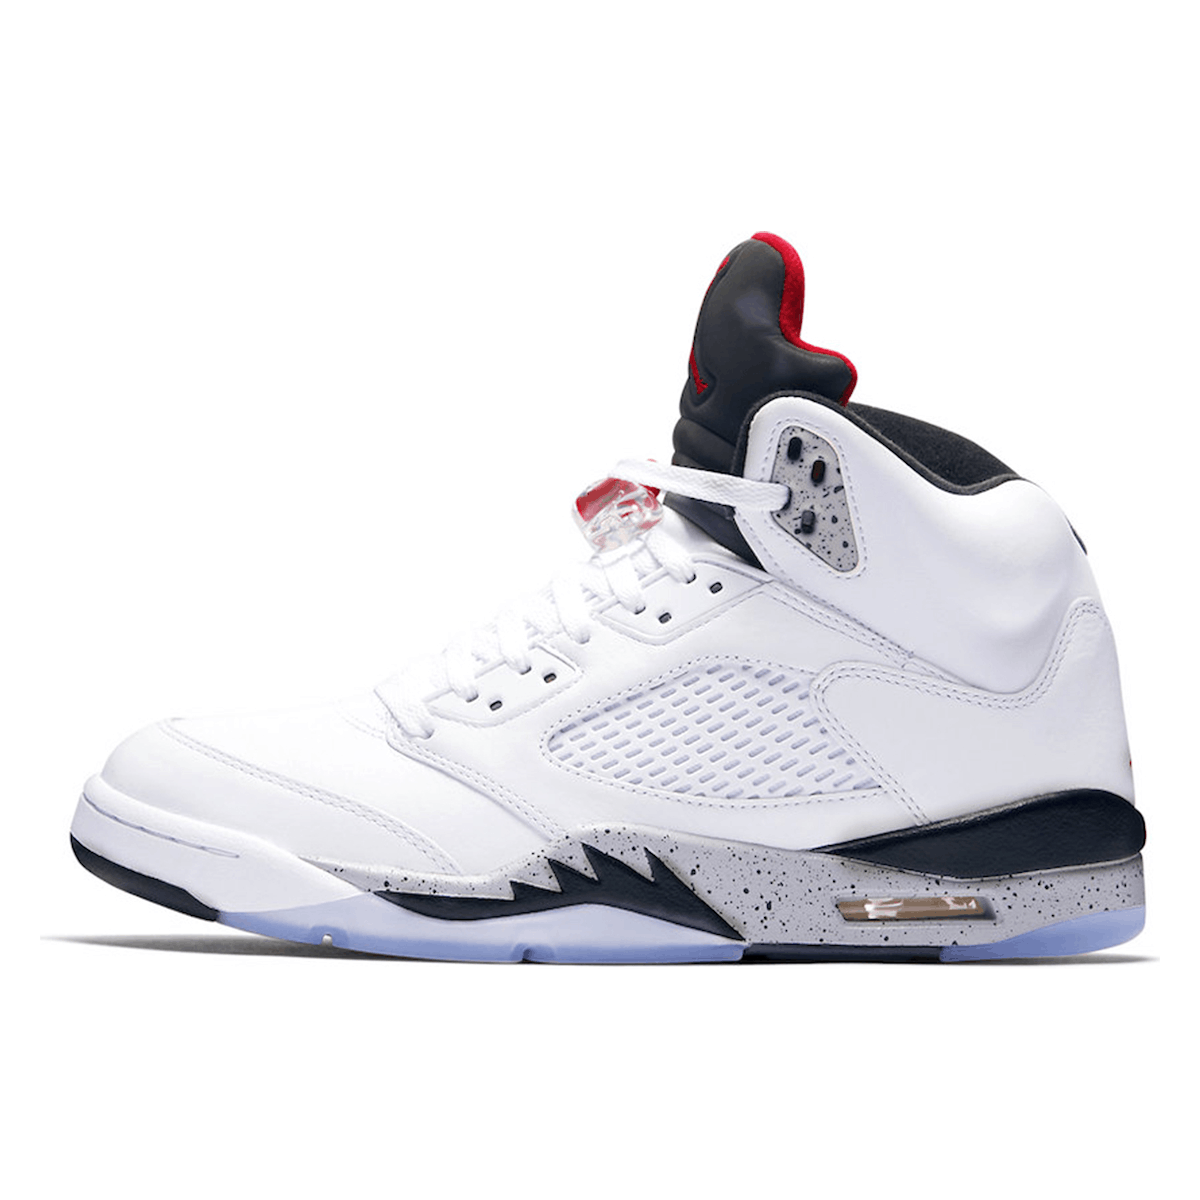 Air Jordan Nike AJ 5 V Retro White Cement 2017